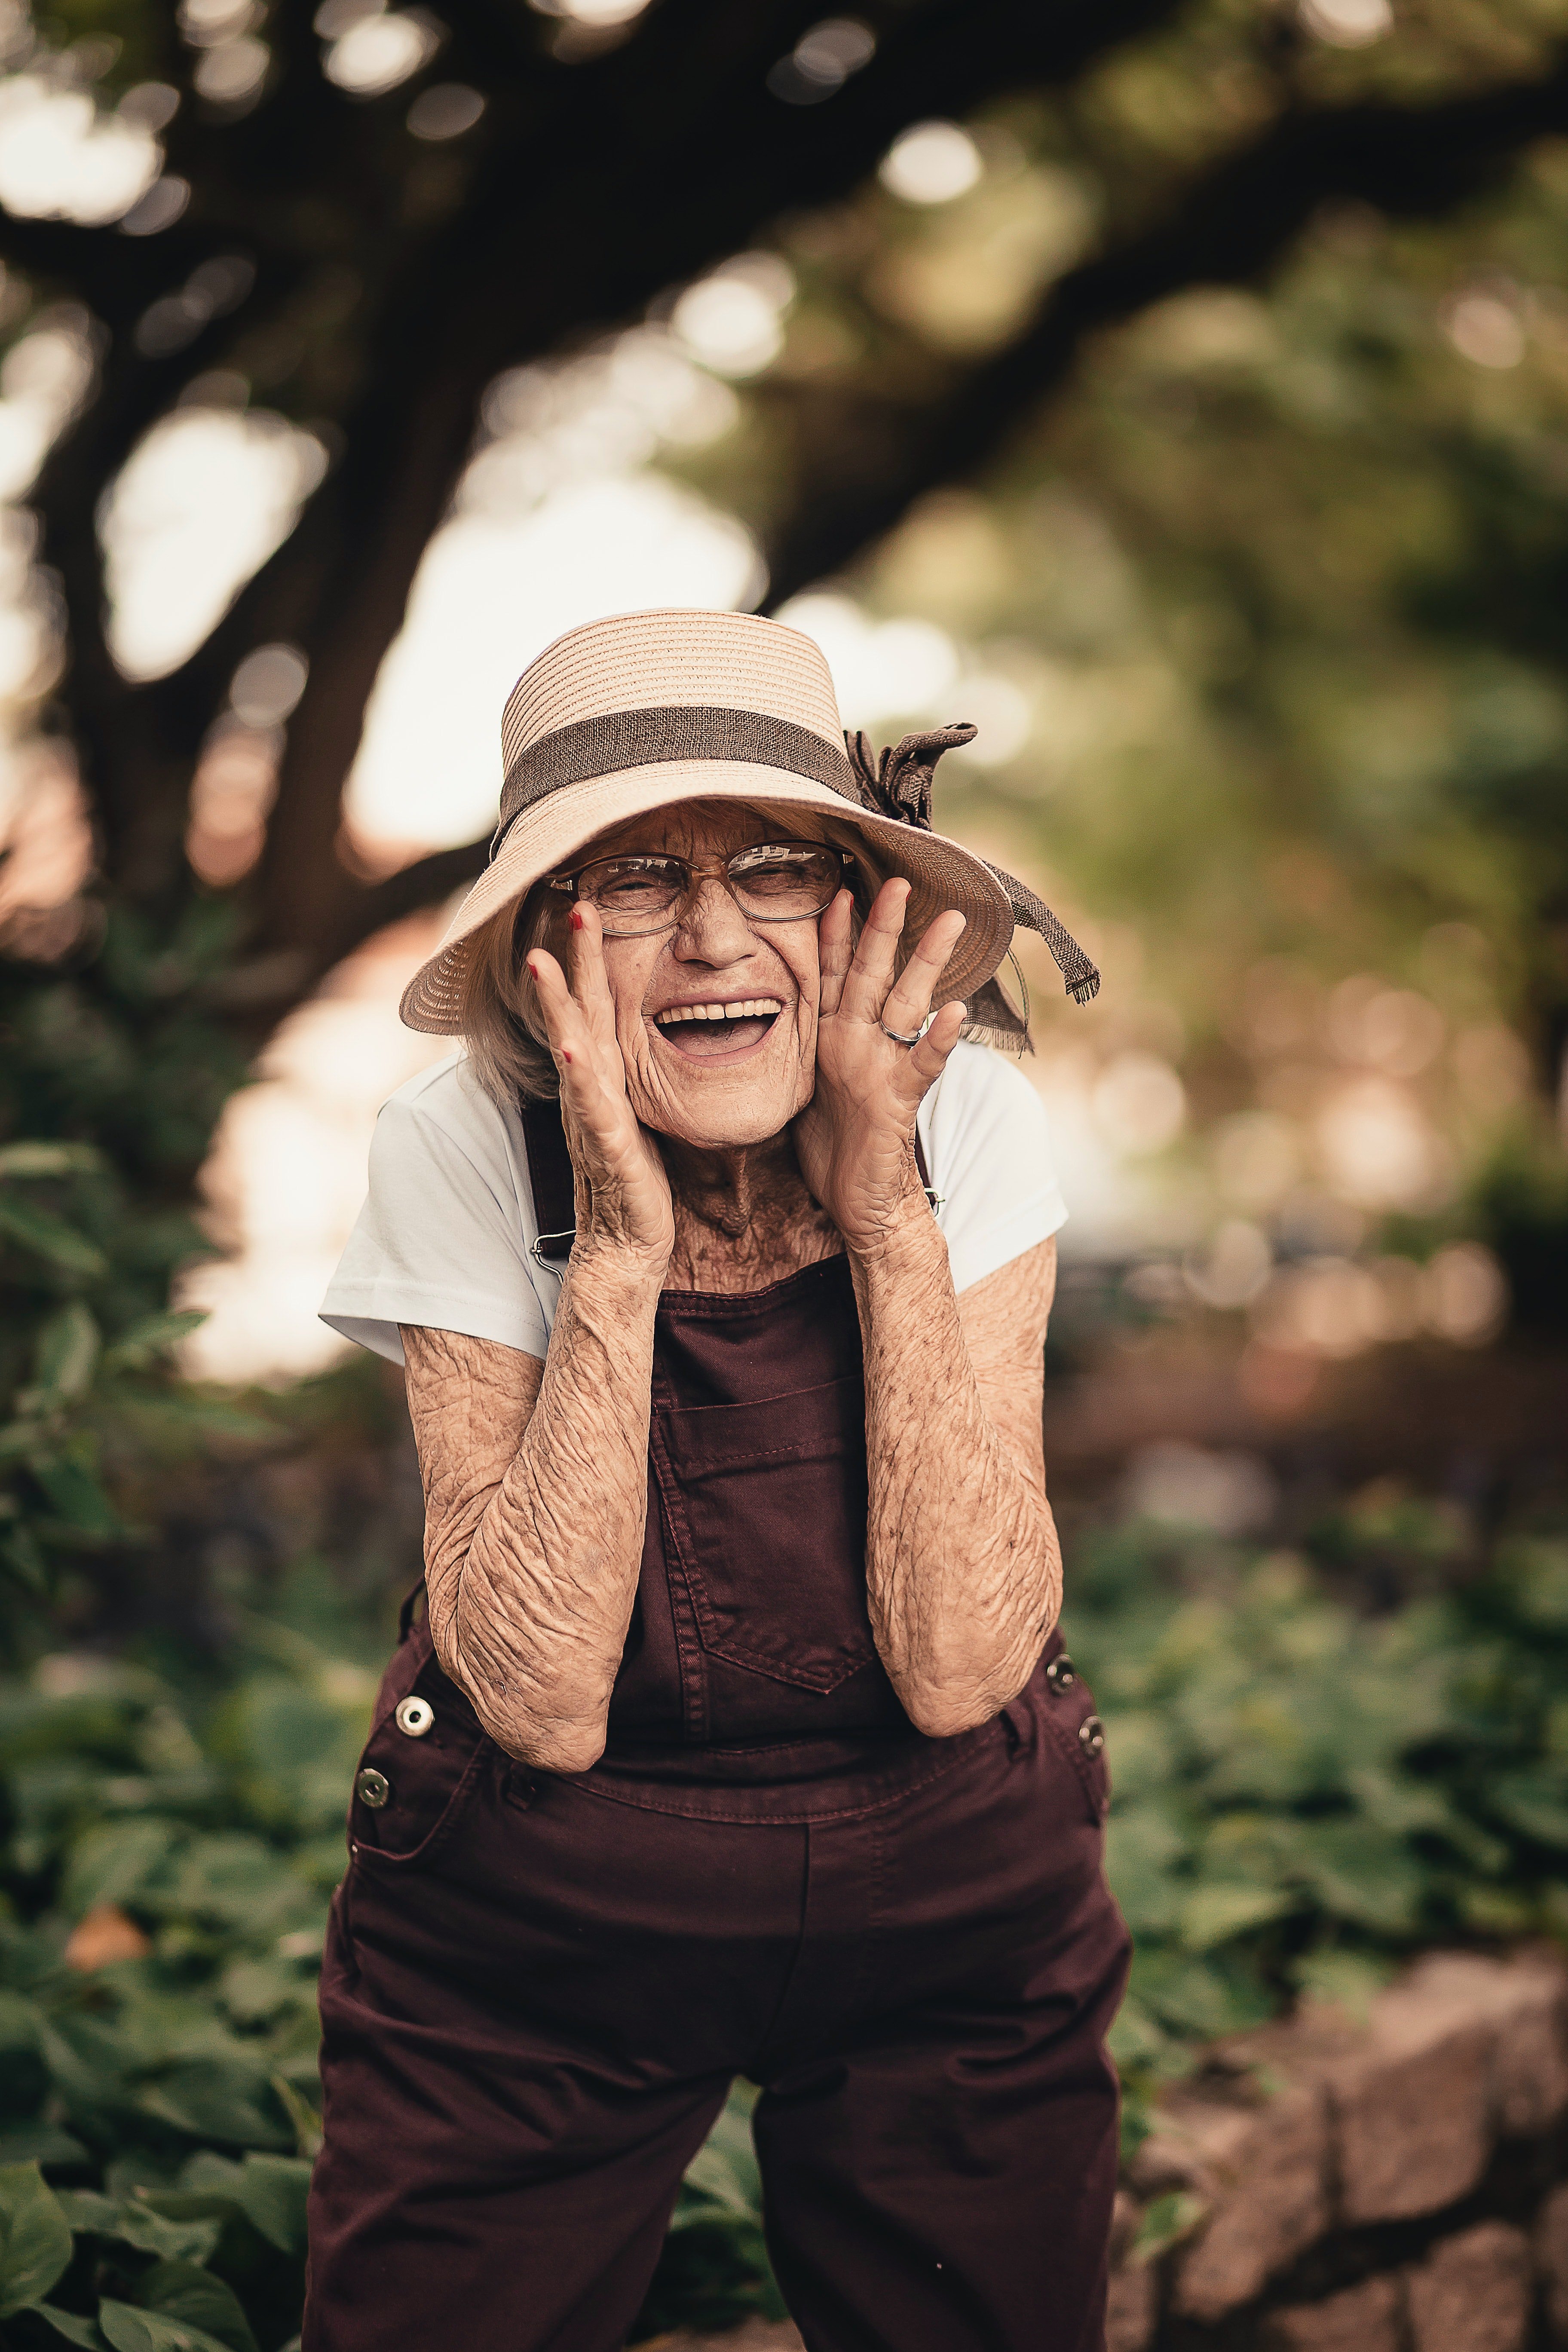 An elderly woman. | Source: Pexels